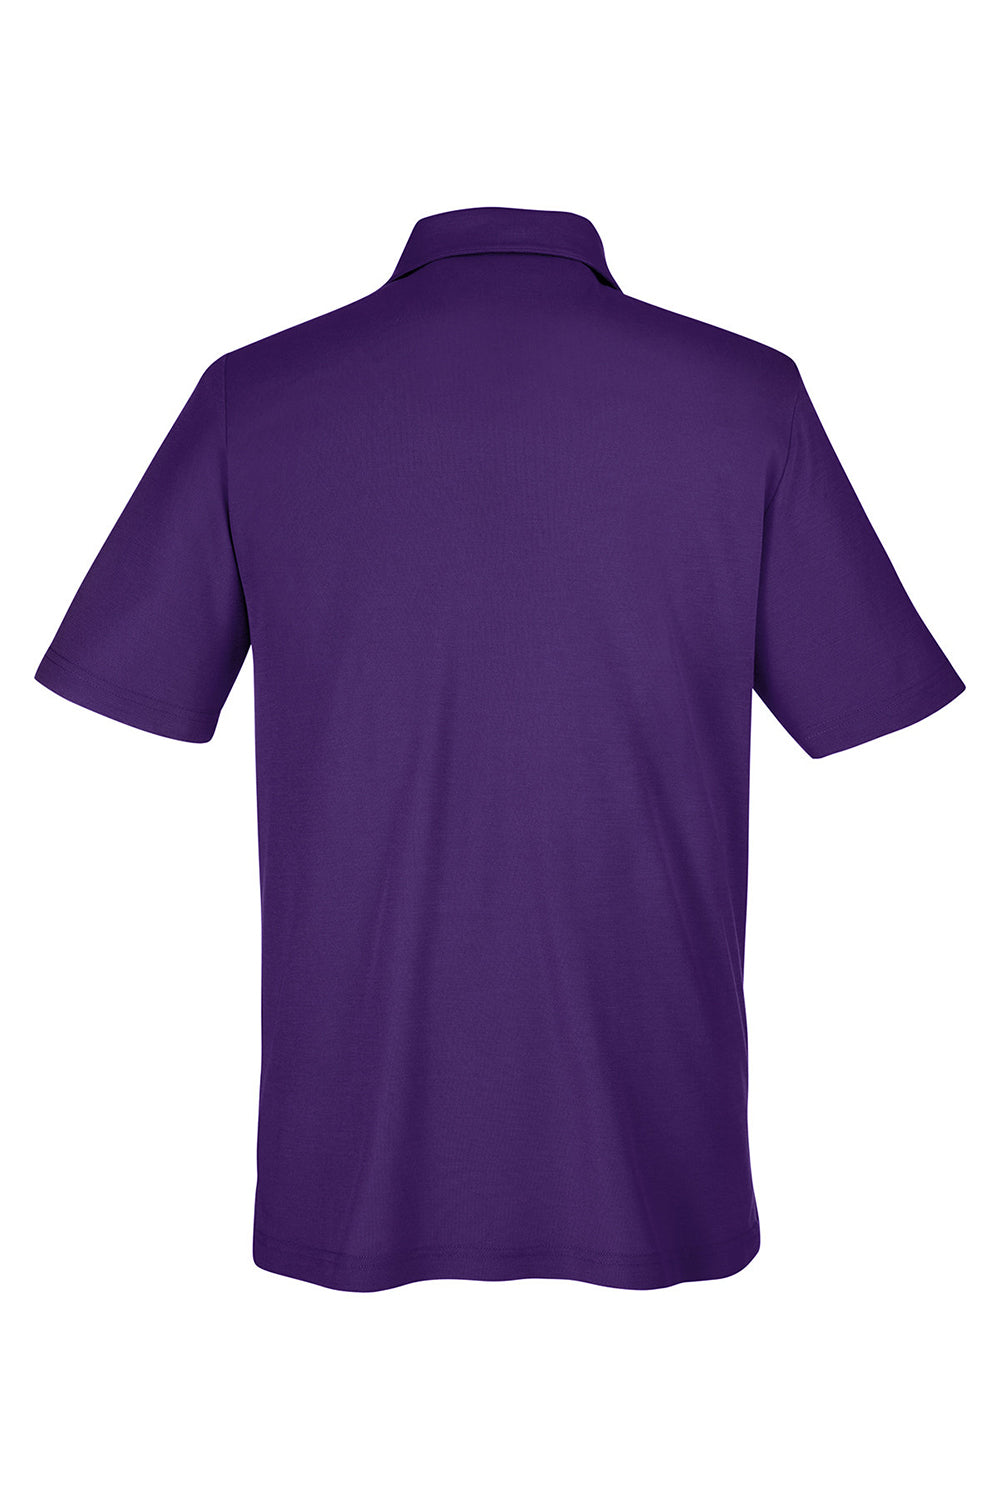 Core 365 CE112 Mens Fusion ChromaSoft Performance Moisture Wicking Short Sleeve Polo Shirt Campus Purple Flat Back